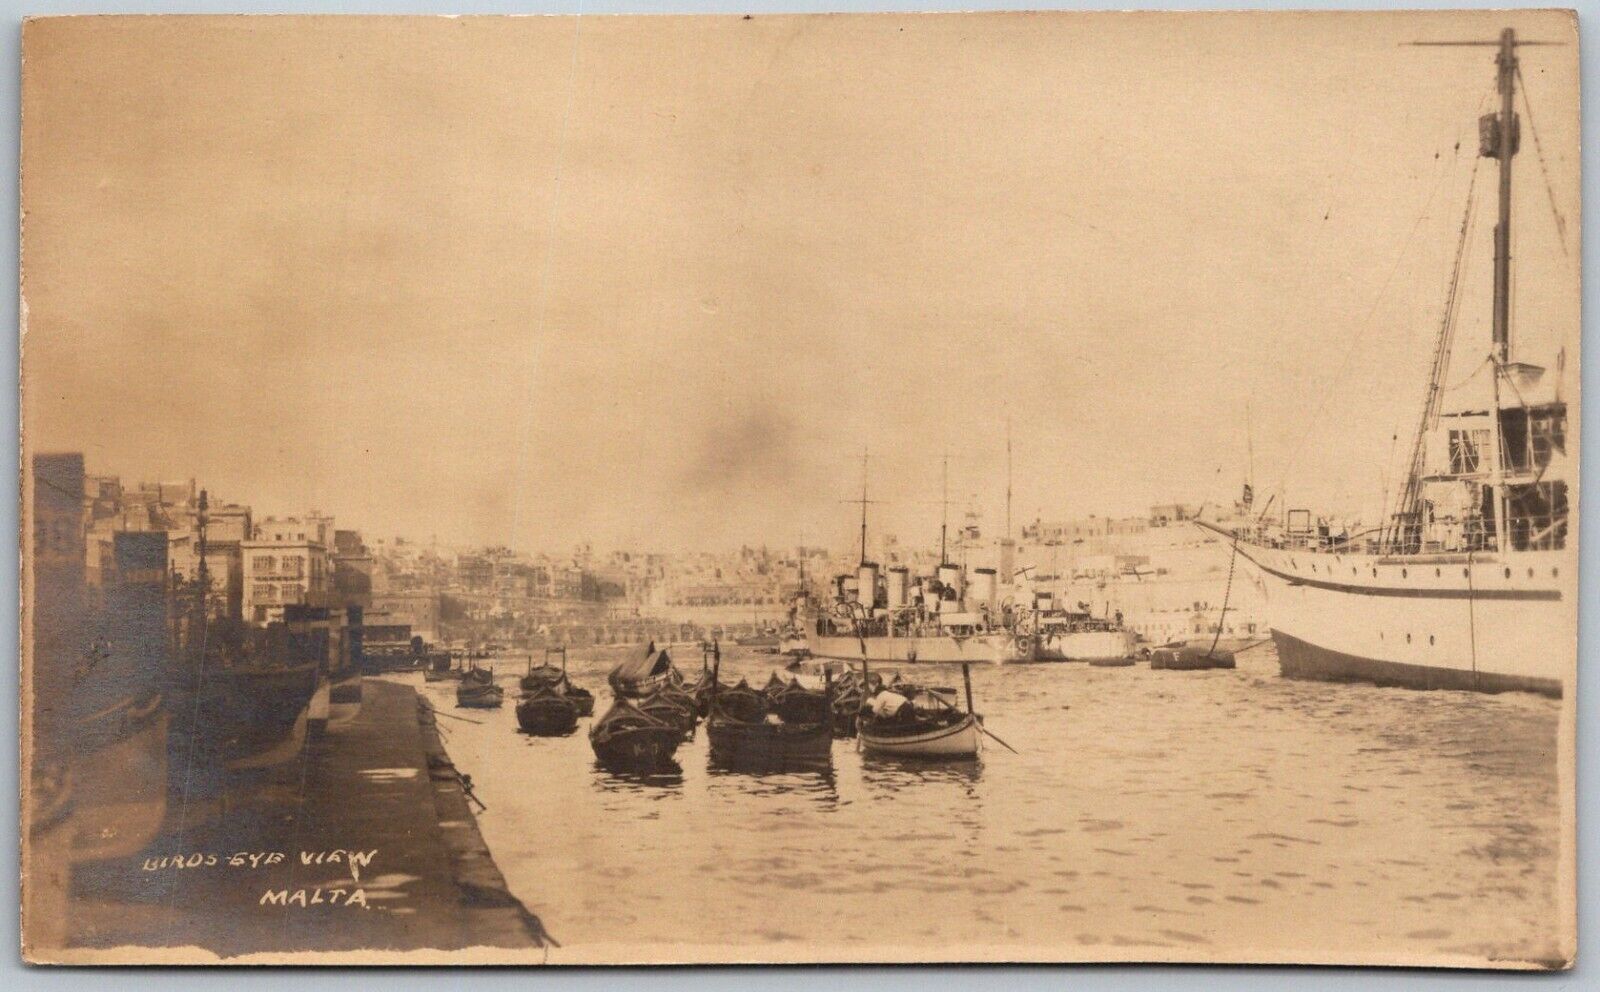 MALTA c1910 RPPC Real Photo Postcard Birdseye View Ships Boats